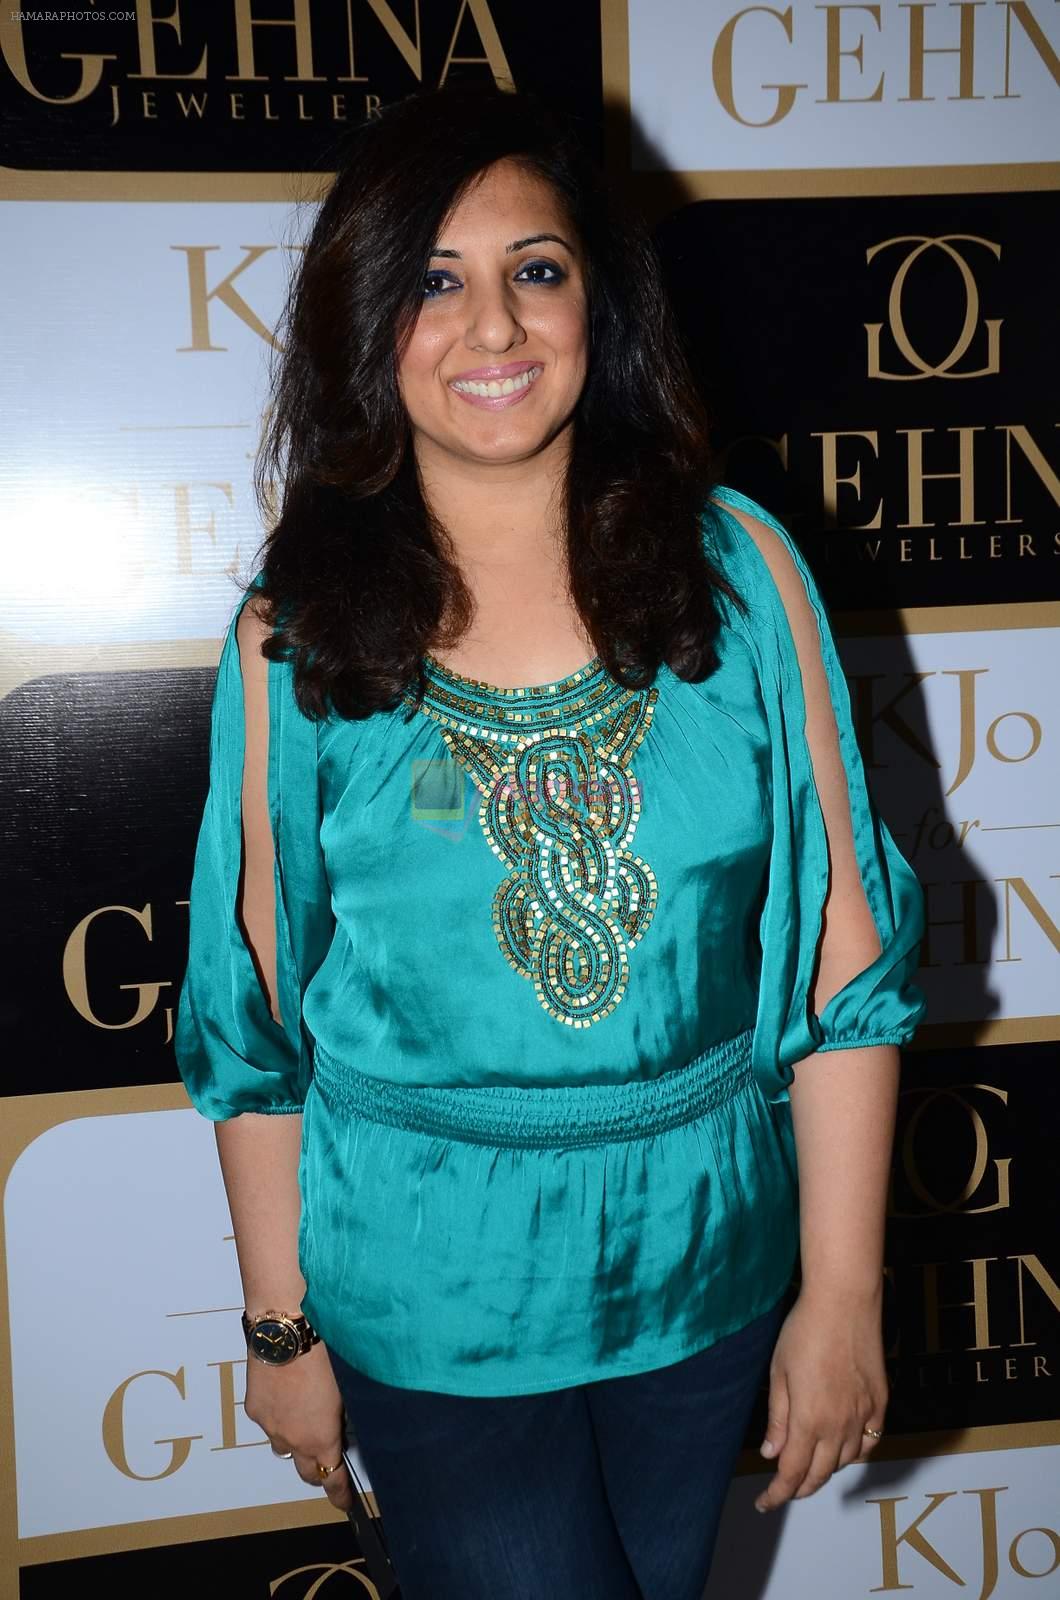 munisha khatwani at the Launch of Karan Johar's special edition Holiday Line by Gehna Jewellers in Mumbai on 13th April 2015